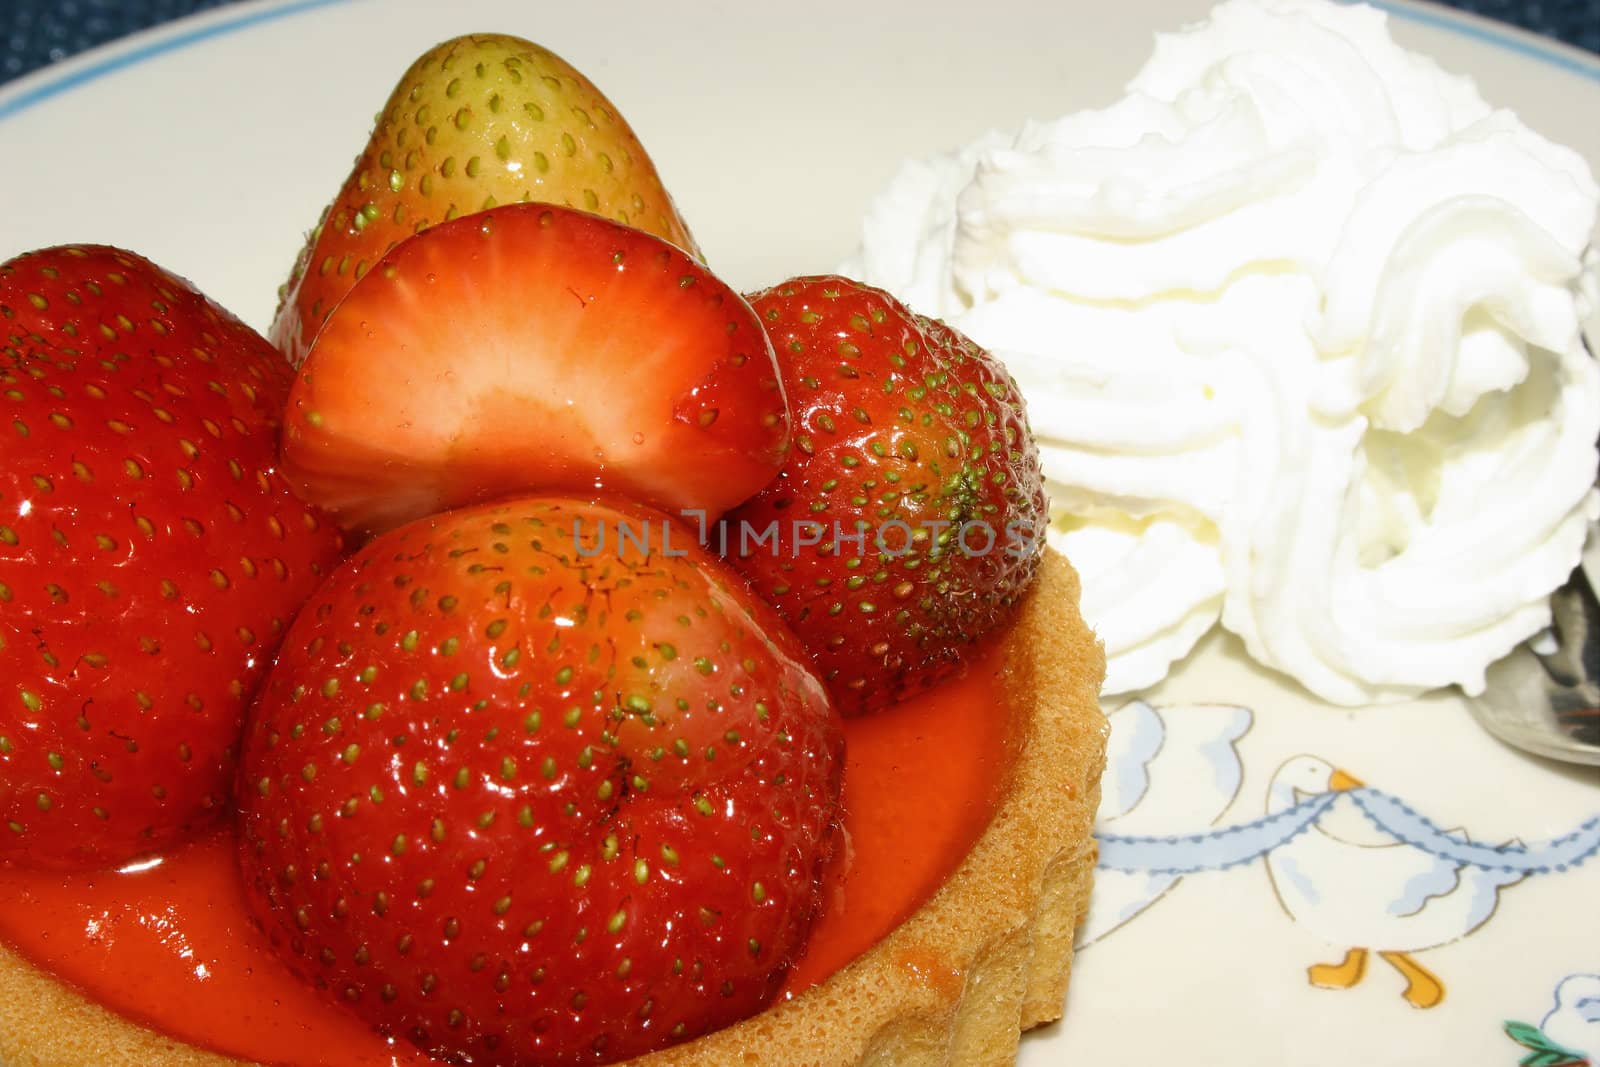 Strawberry tart by tdietrich